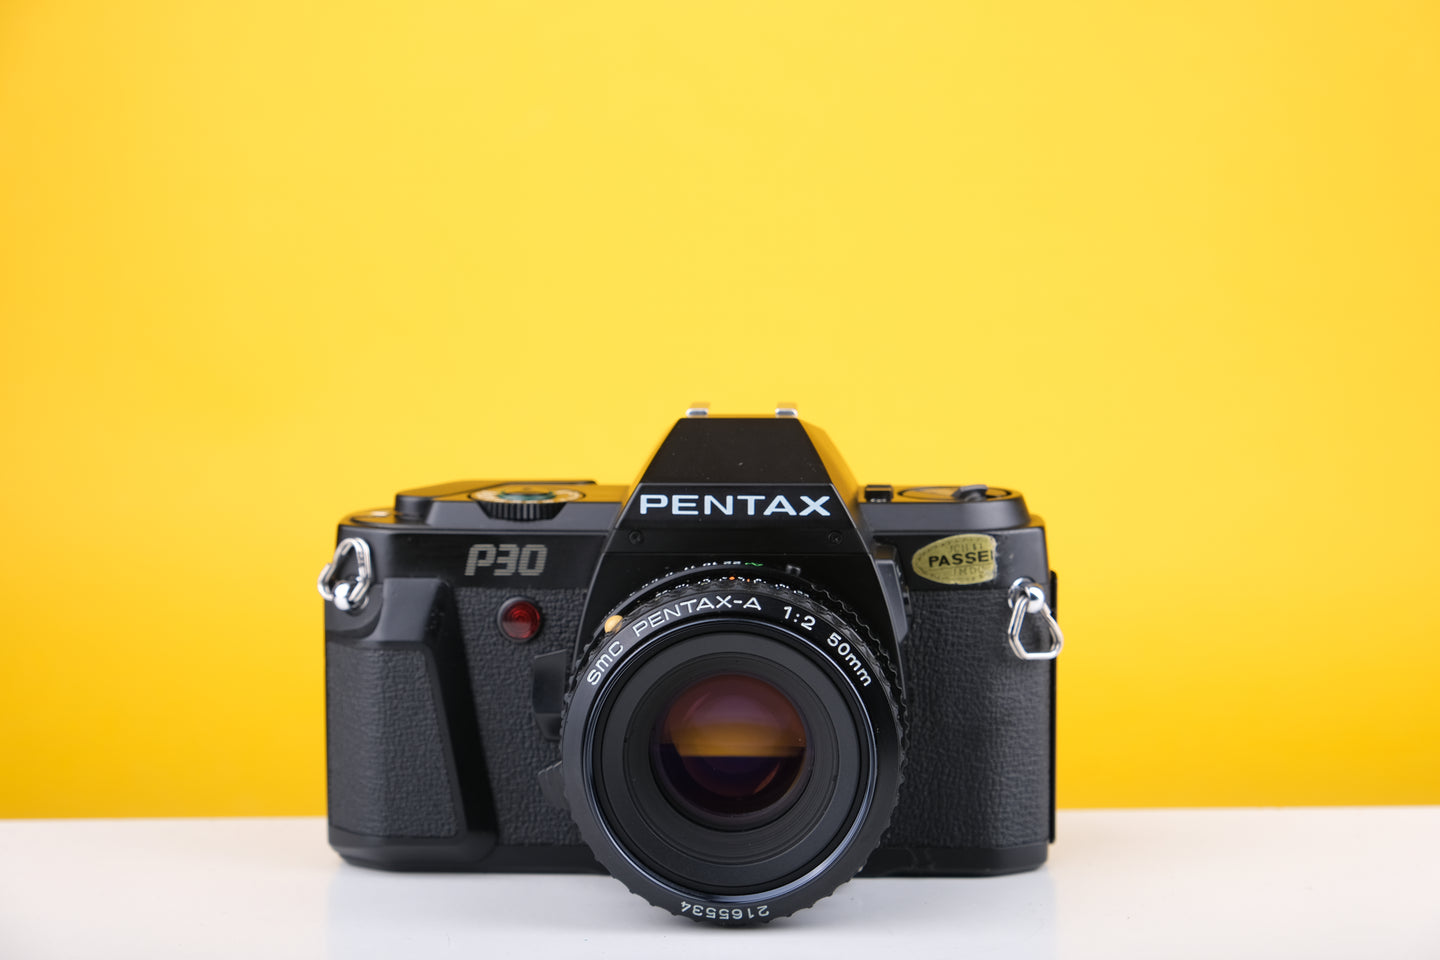 Pentax P30 35mm SLR Film Camera with 50mm f2 Lens